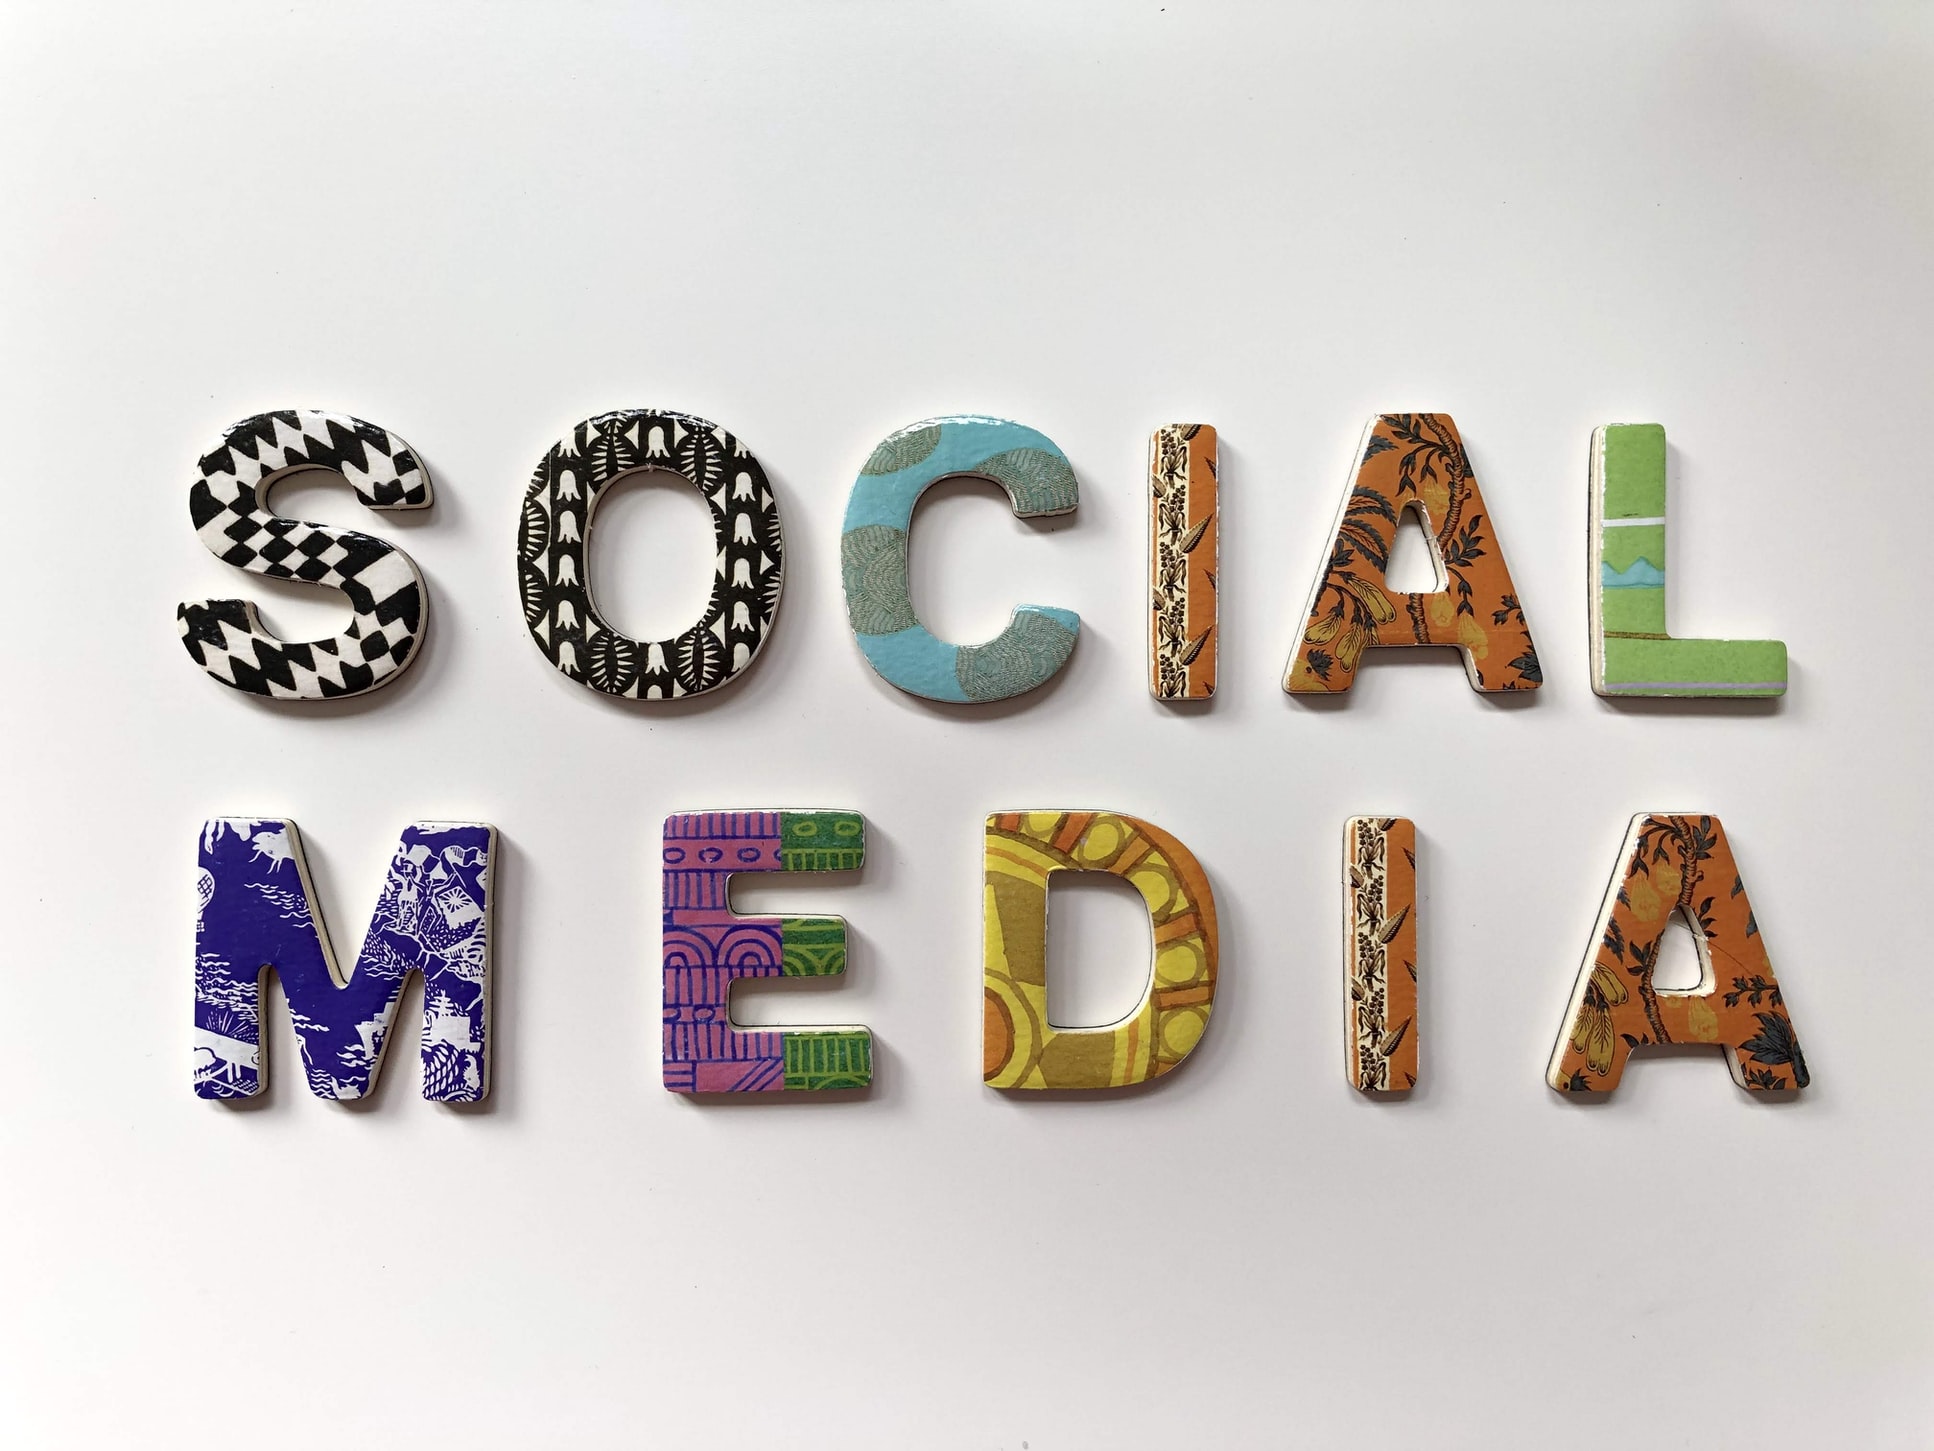 5 Killer Social Media Marketing Tips to Keep in Mind for 2021